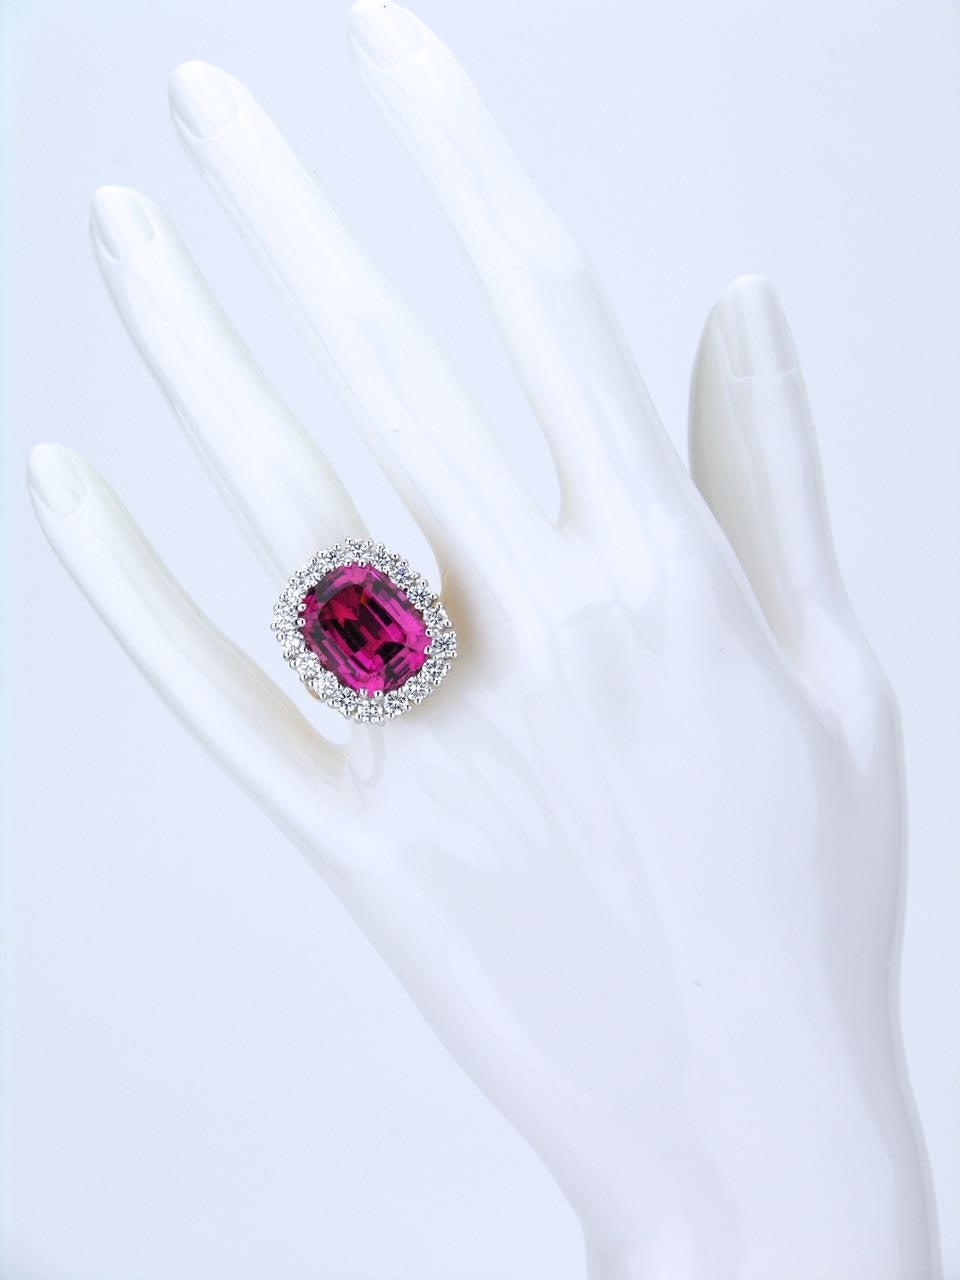 Australian Shocking Pink Cushion Cut Tourmaline Diamond Gold Cluster Ring 3